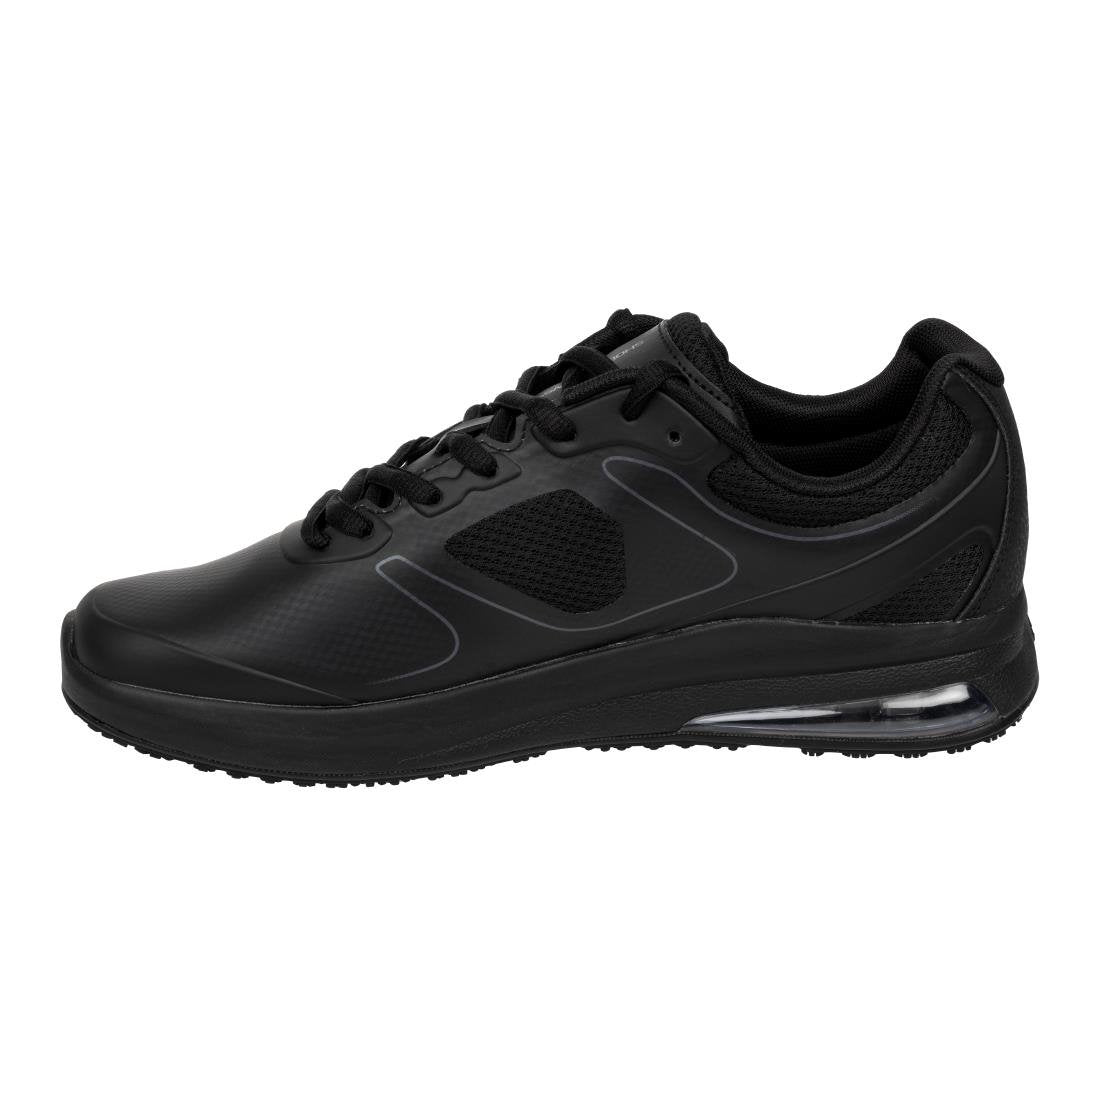 BB586-50 Shoes for Crews Men's Evolution Trainers Black Size 50